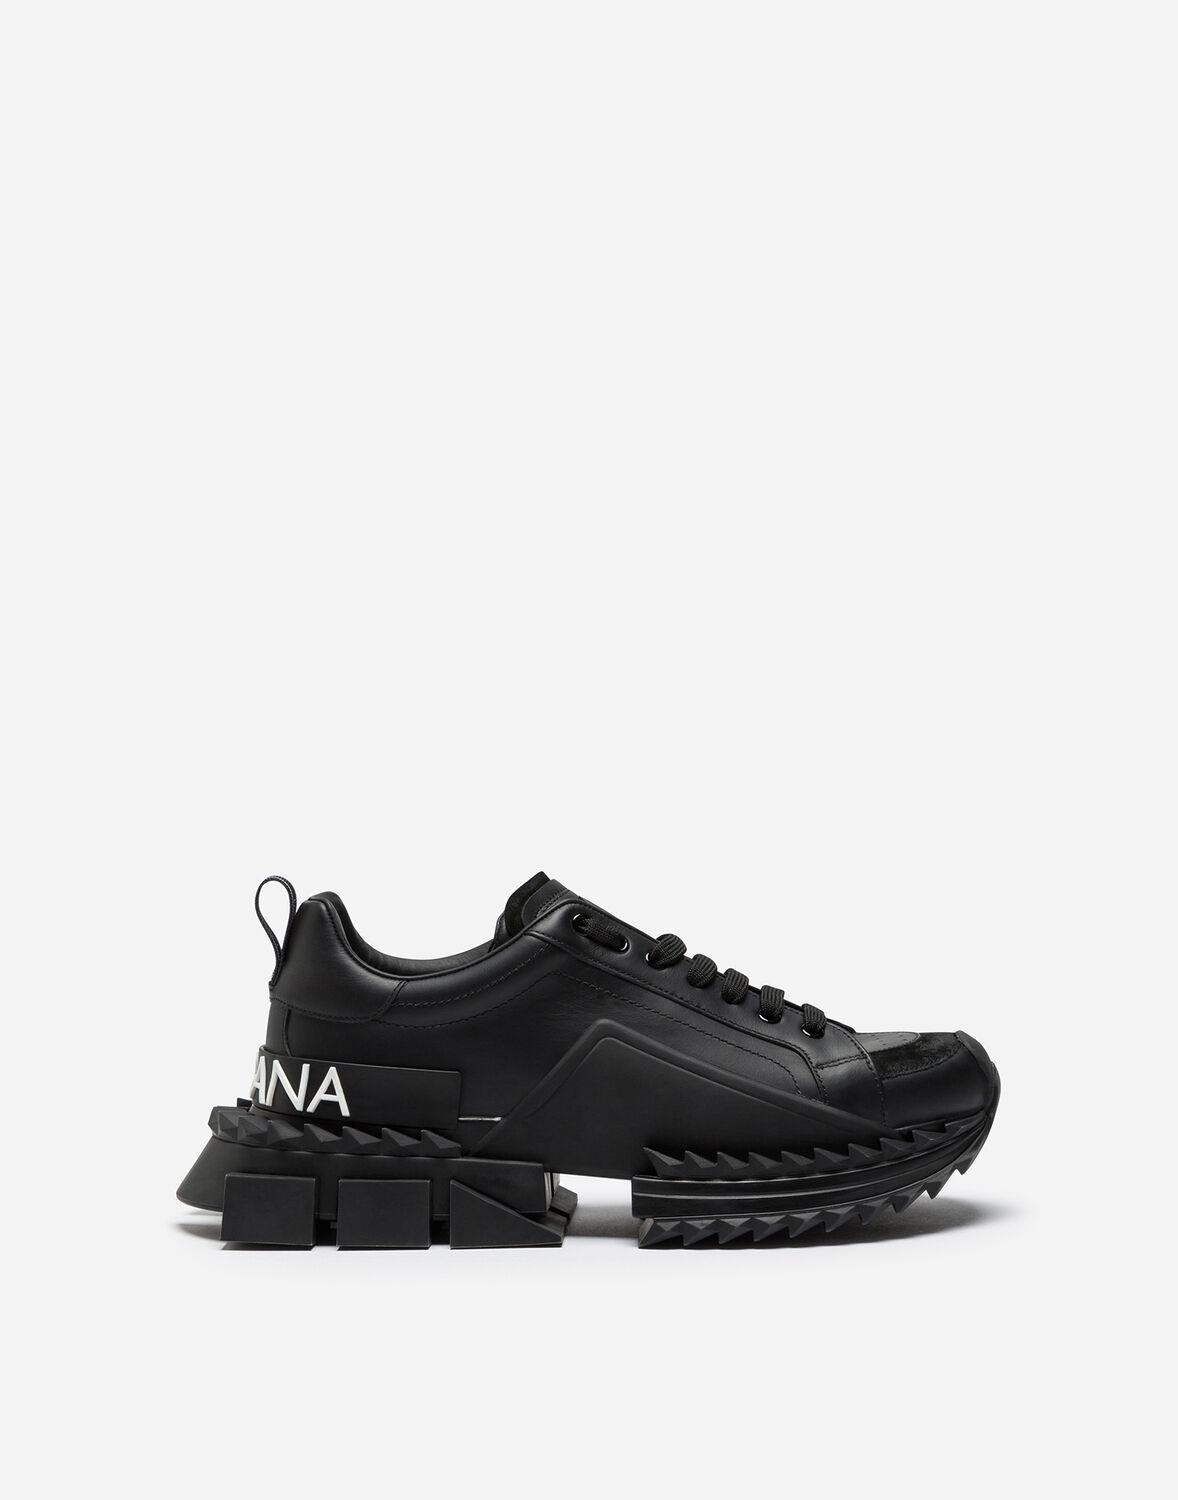 Dolce & Gabbana Super Queen Sneakers In Calfskin in Black | Lyst